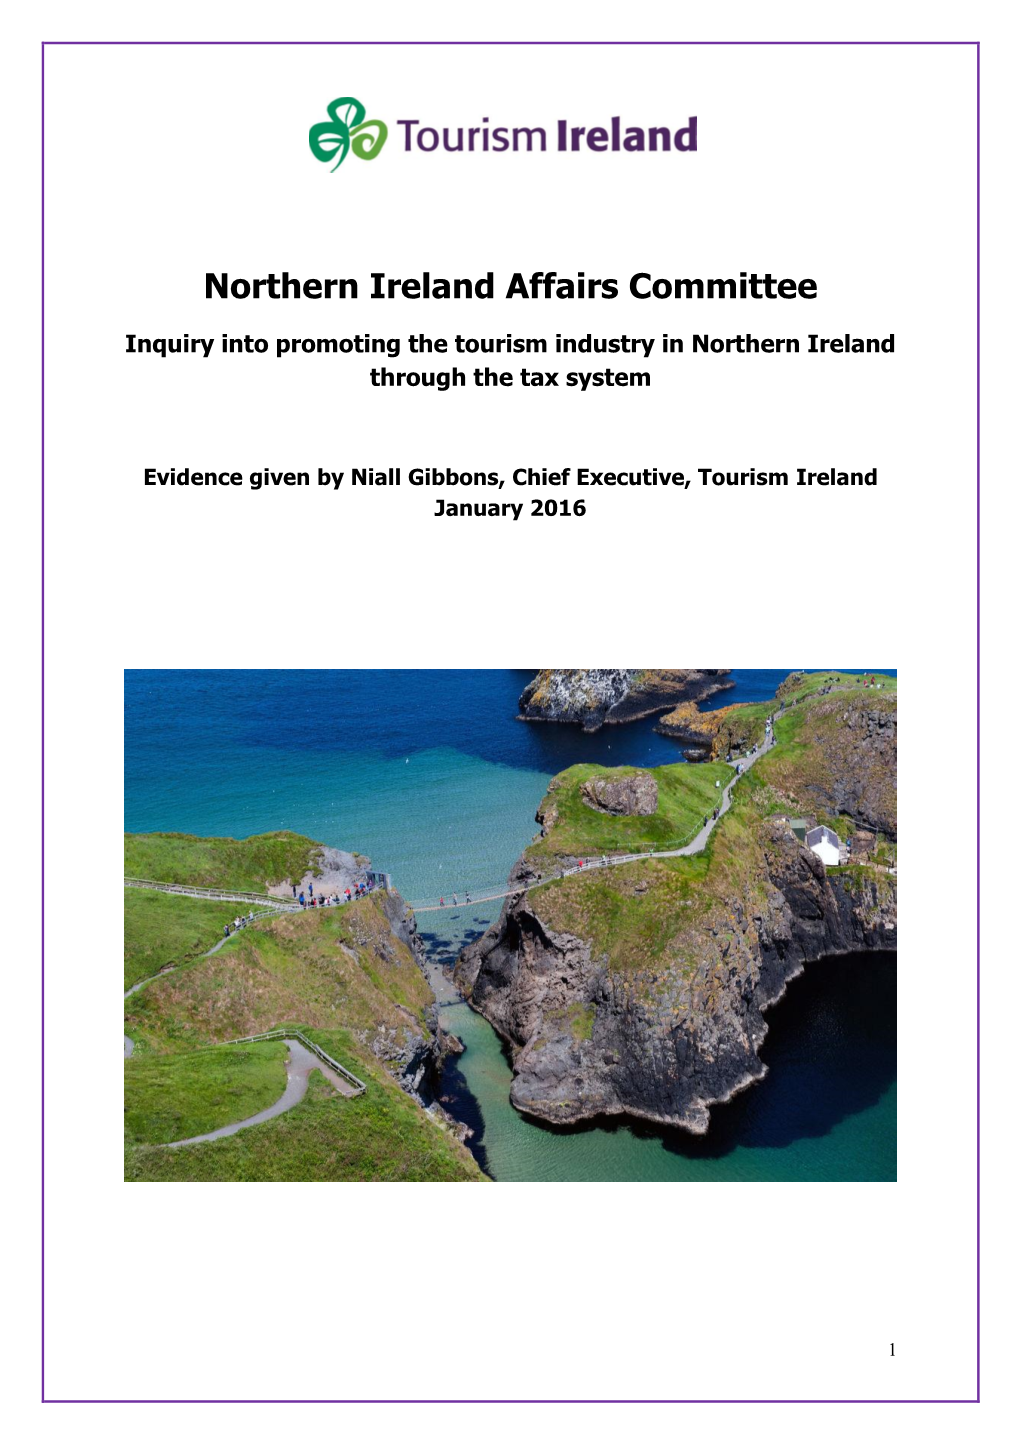 Statement to Northern Ireland Affairs Committee